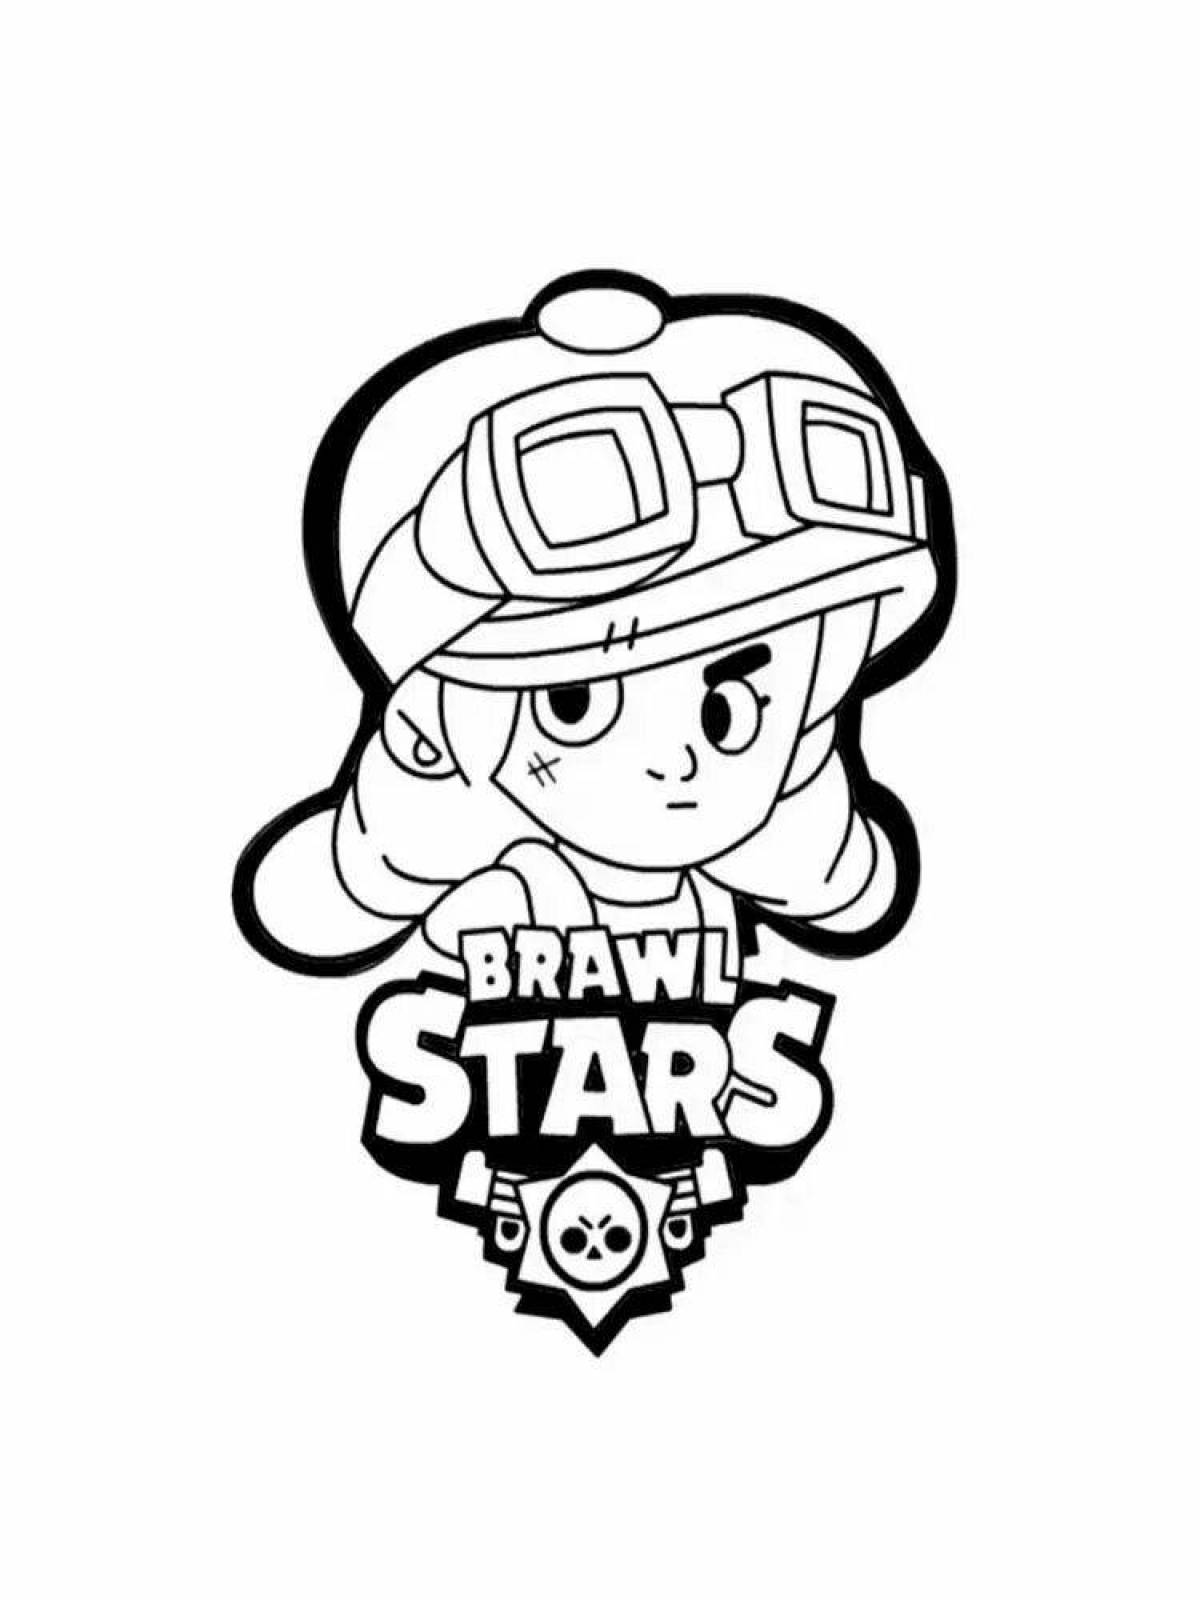 Bravo stars shiny logo coloring book